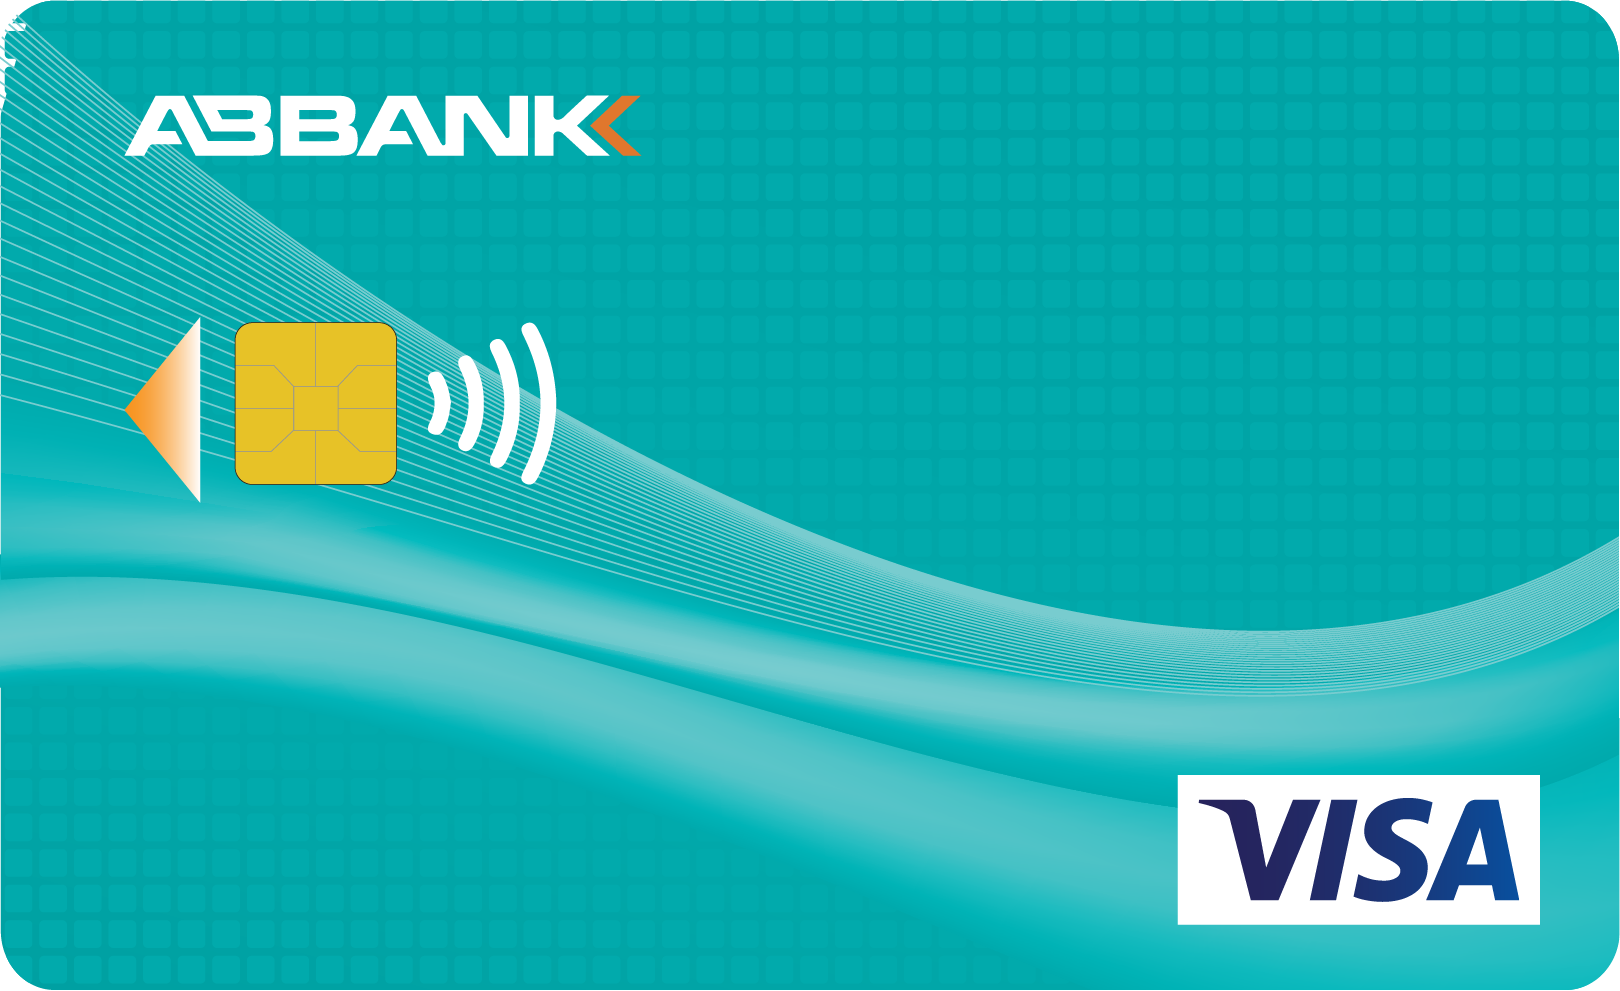 Thẻ ABBank Visa Chuẩn